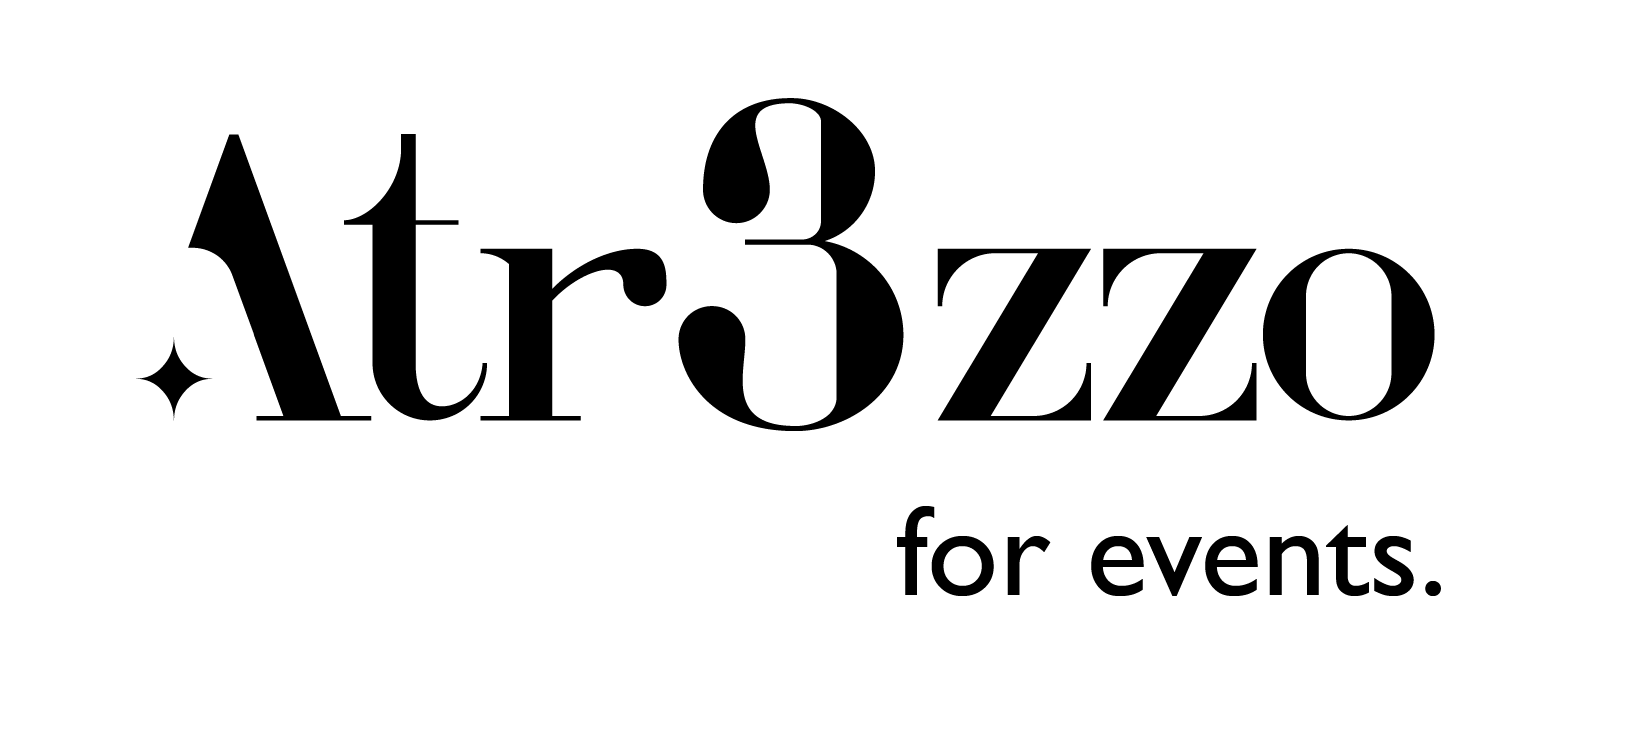 ATR3ZZO for events logo